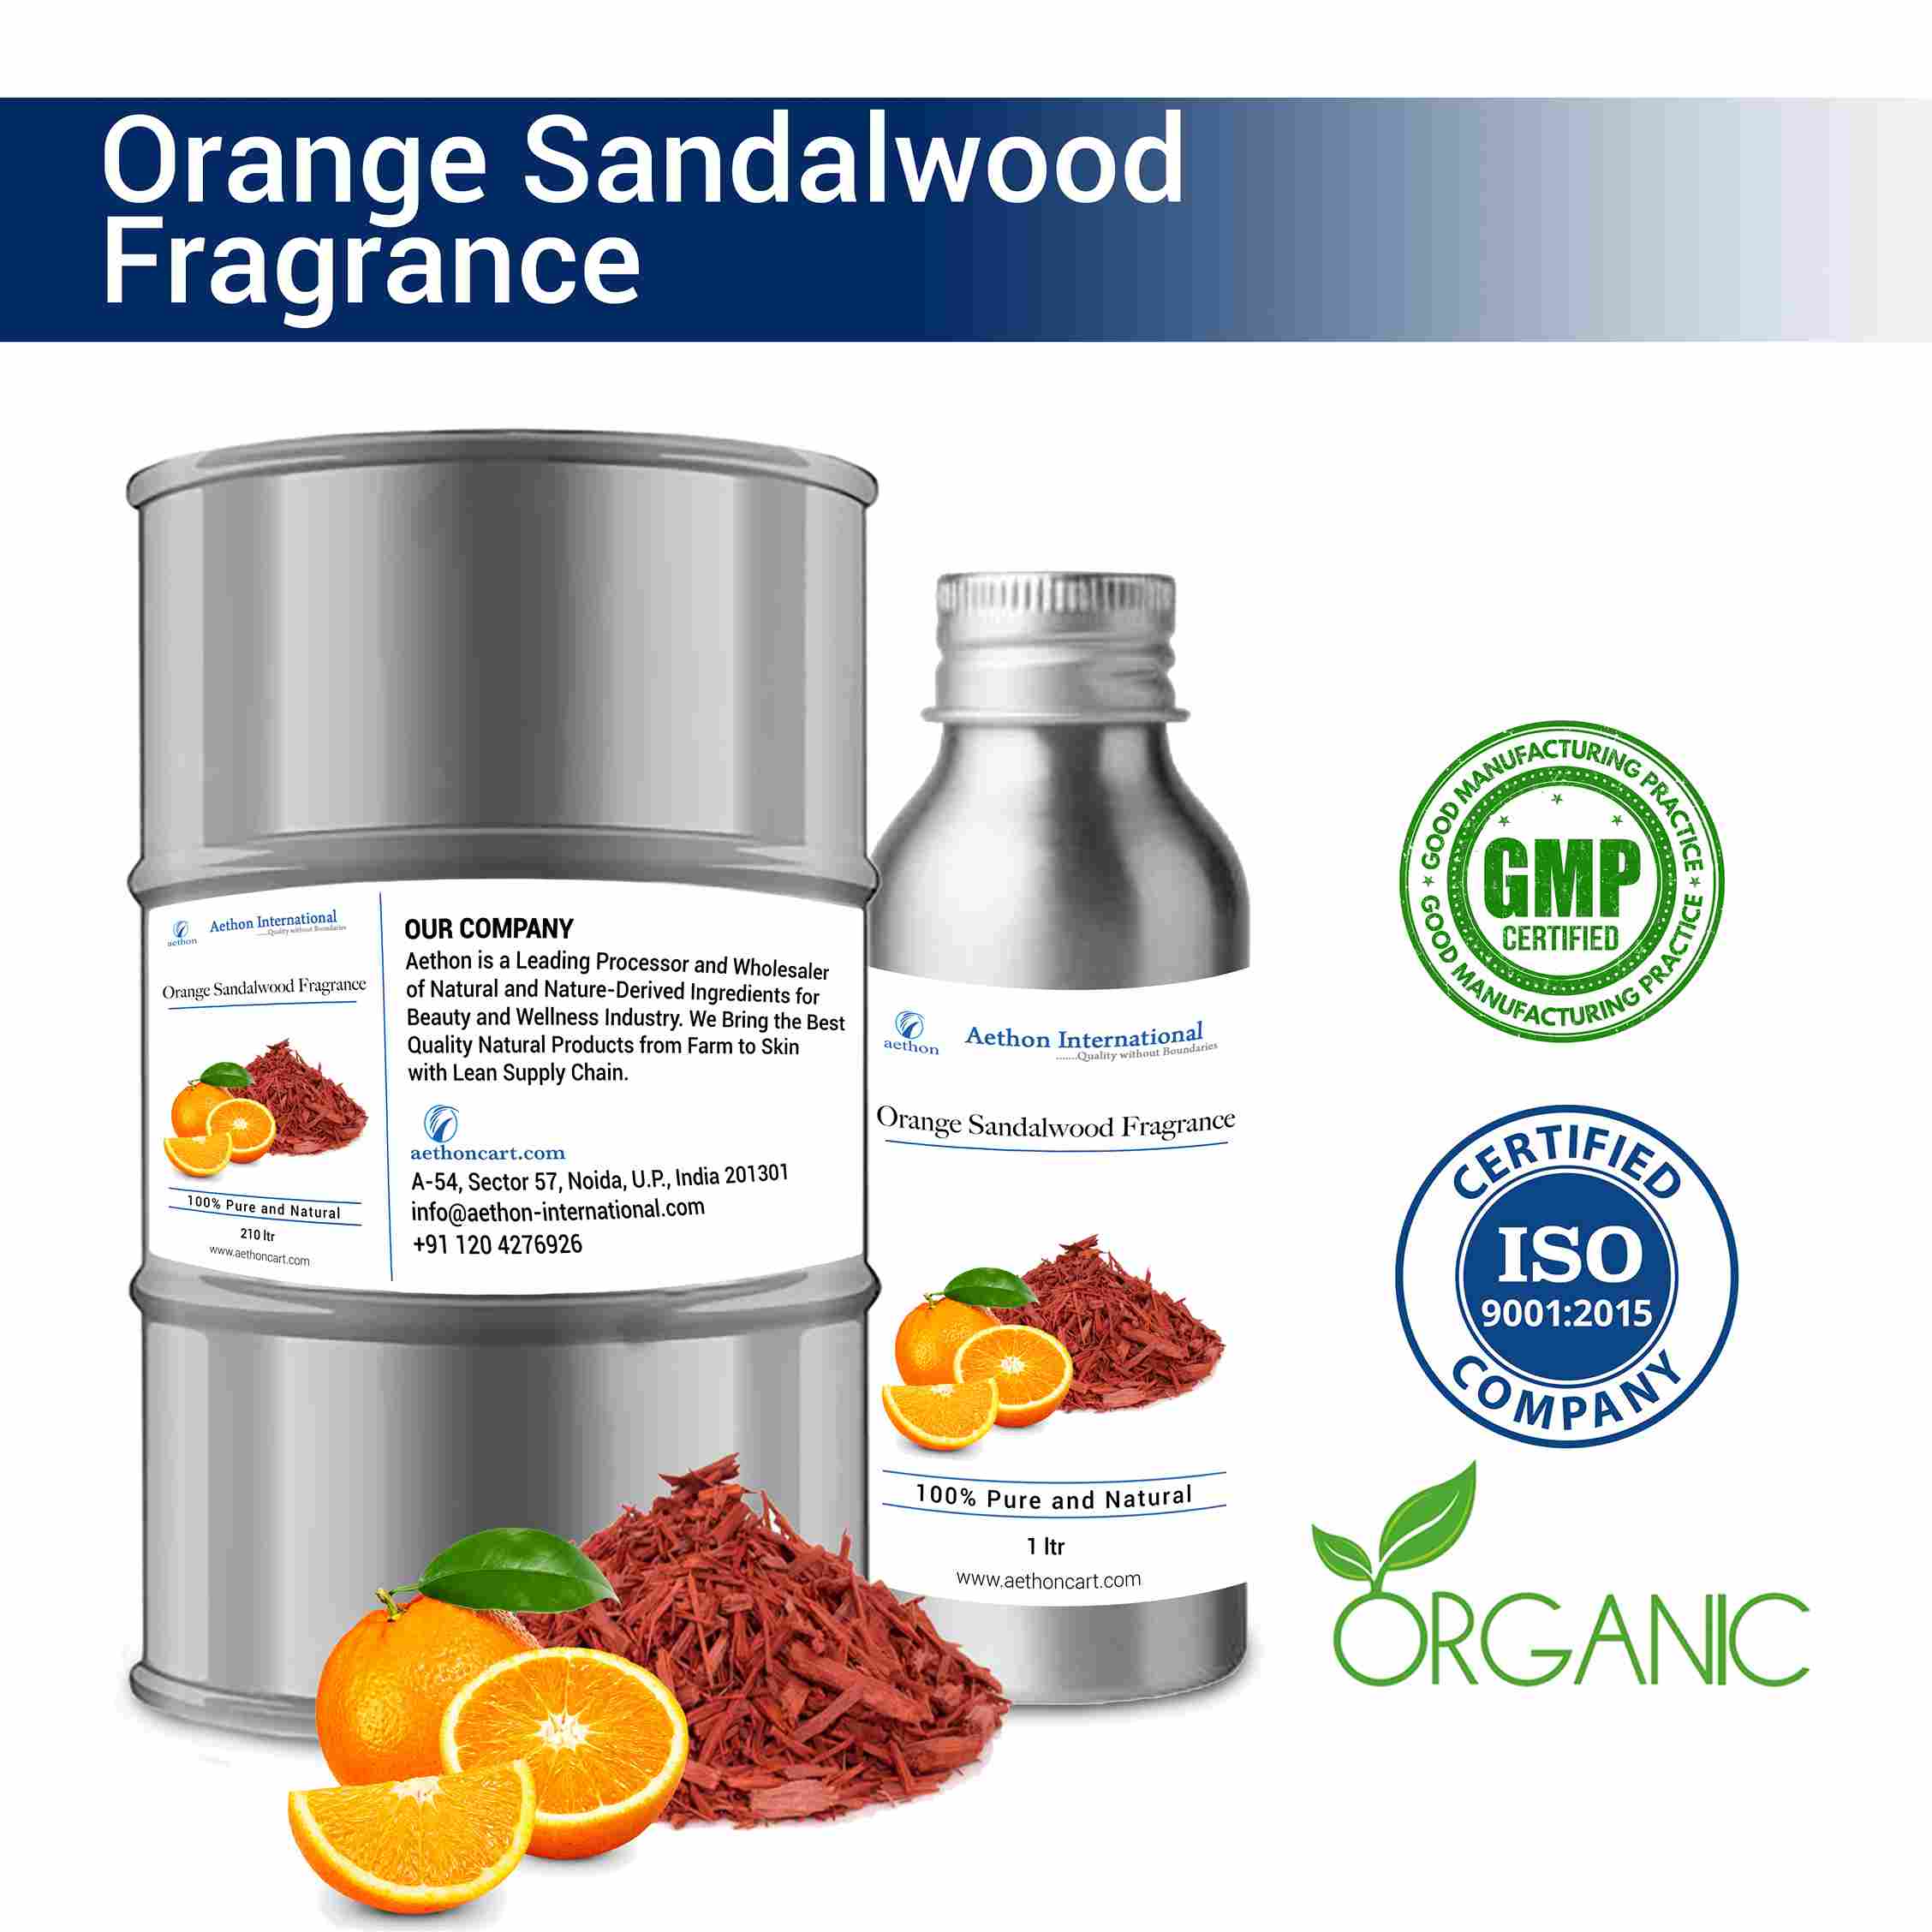 Orange Sandalwood Fragrance